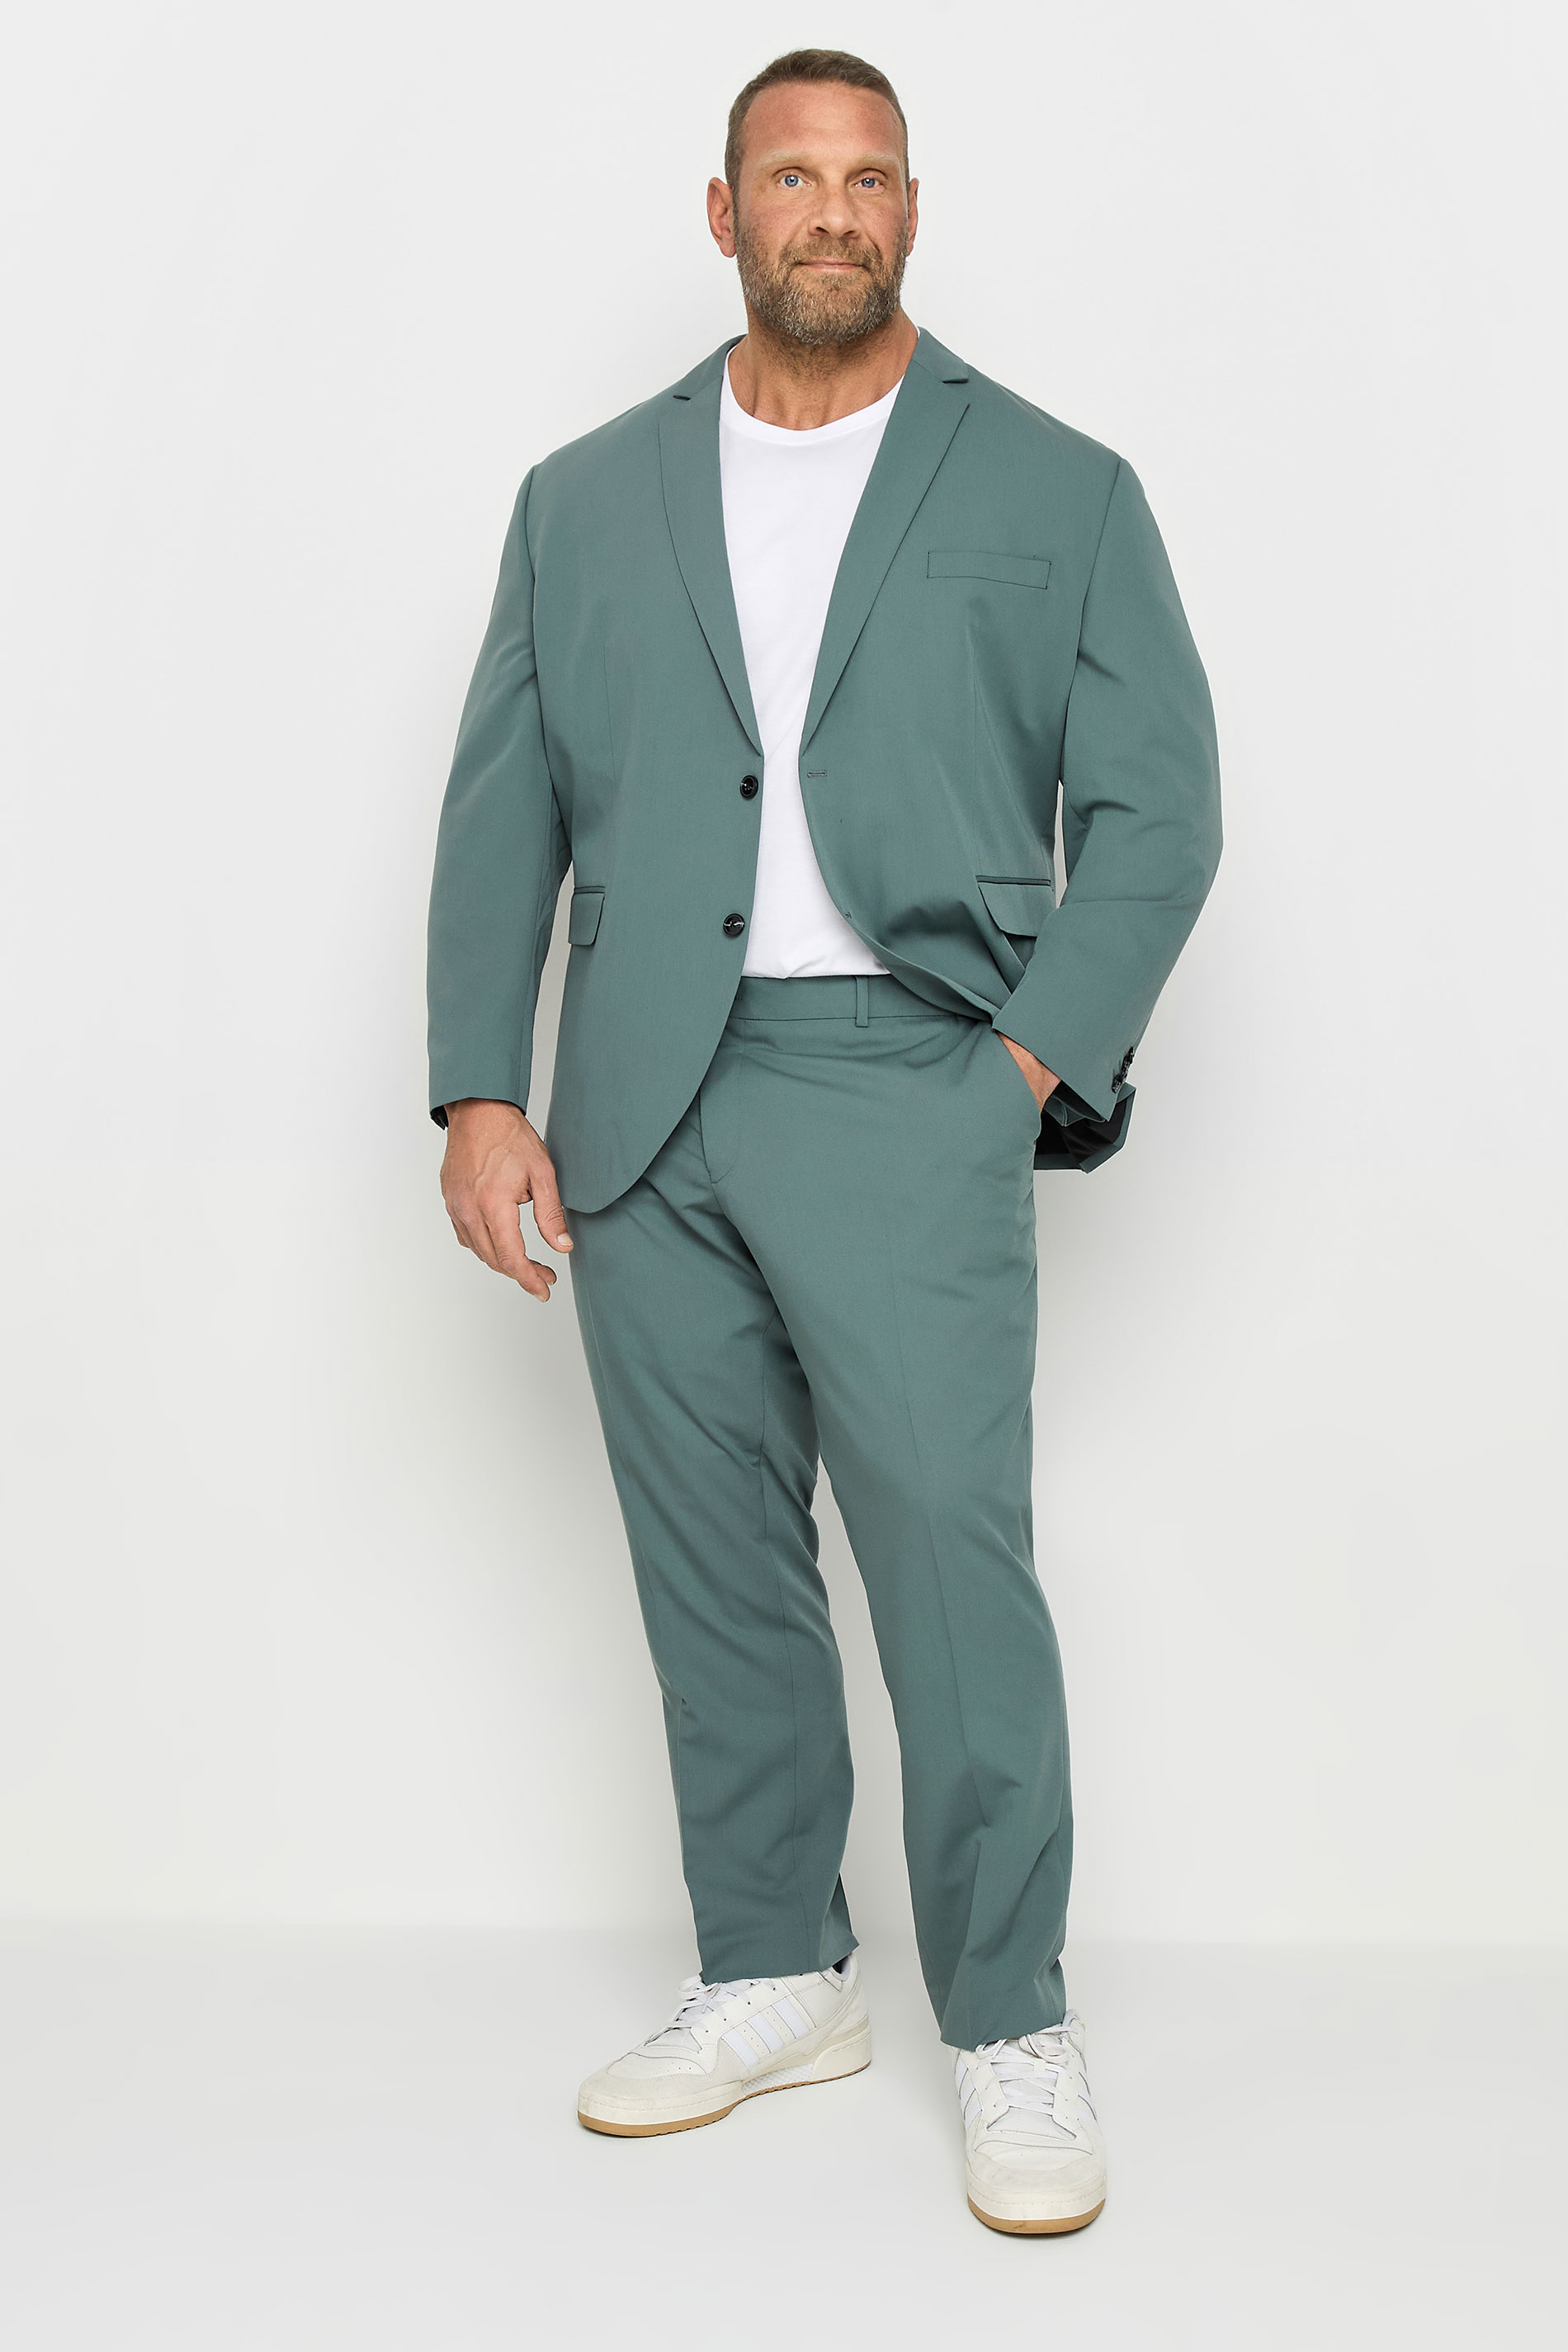 JACK & JONES Big & Tall Balsam Green Franco Suit | BadRhino 1